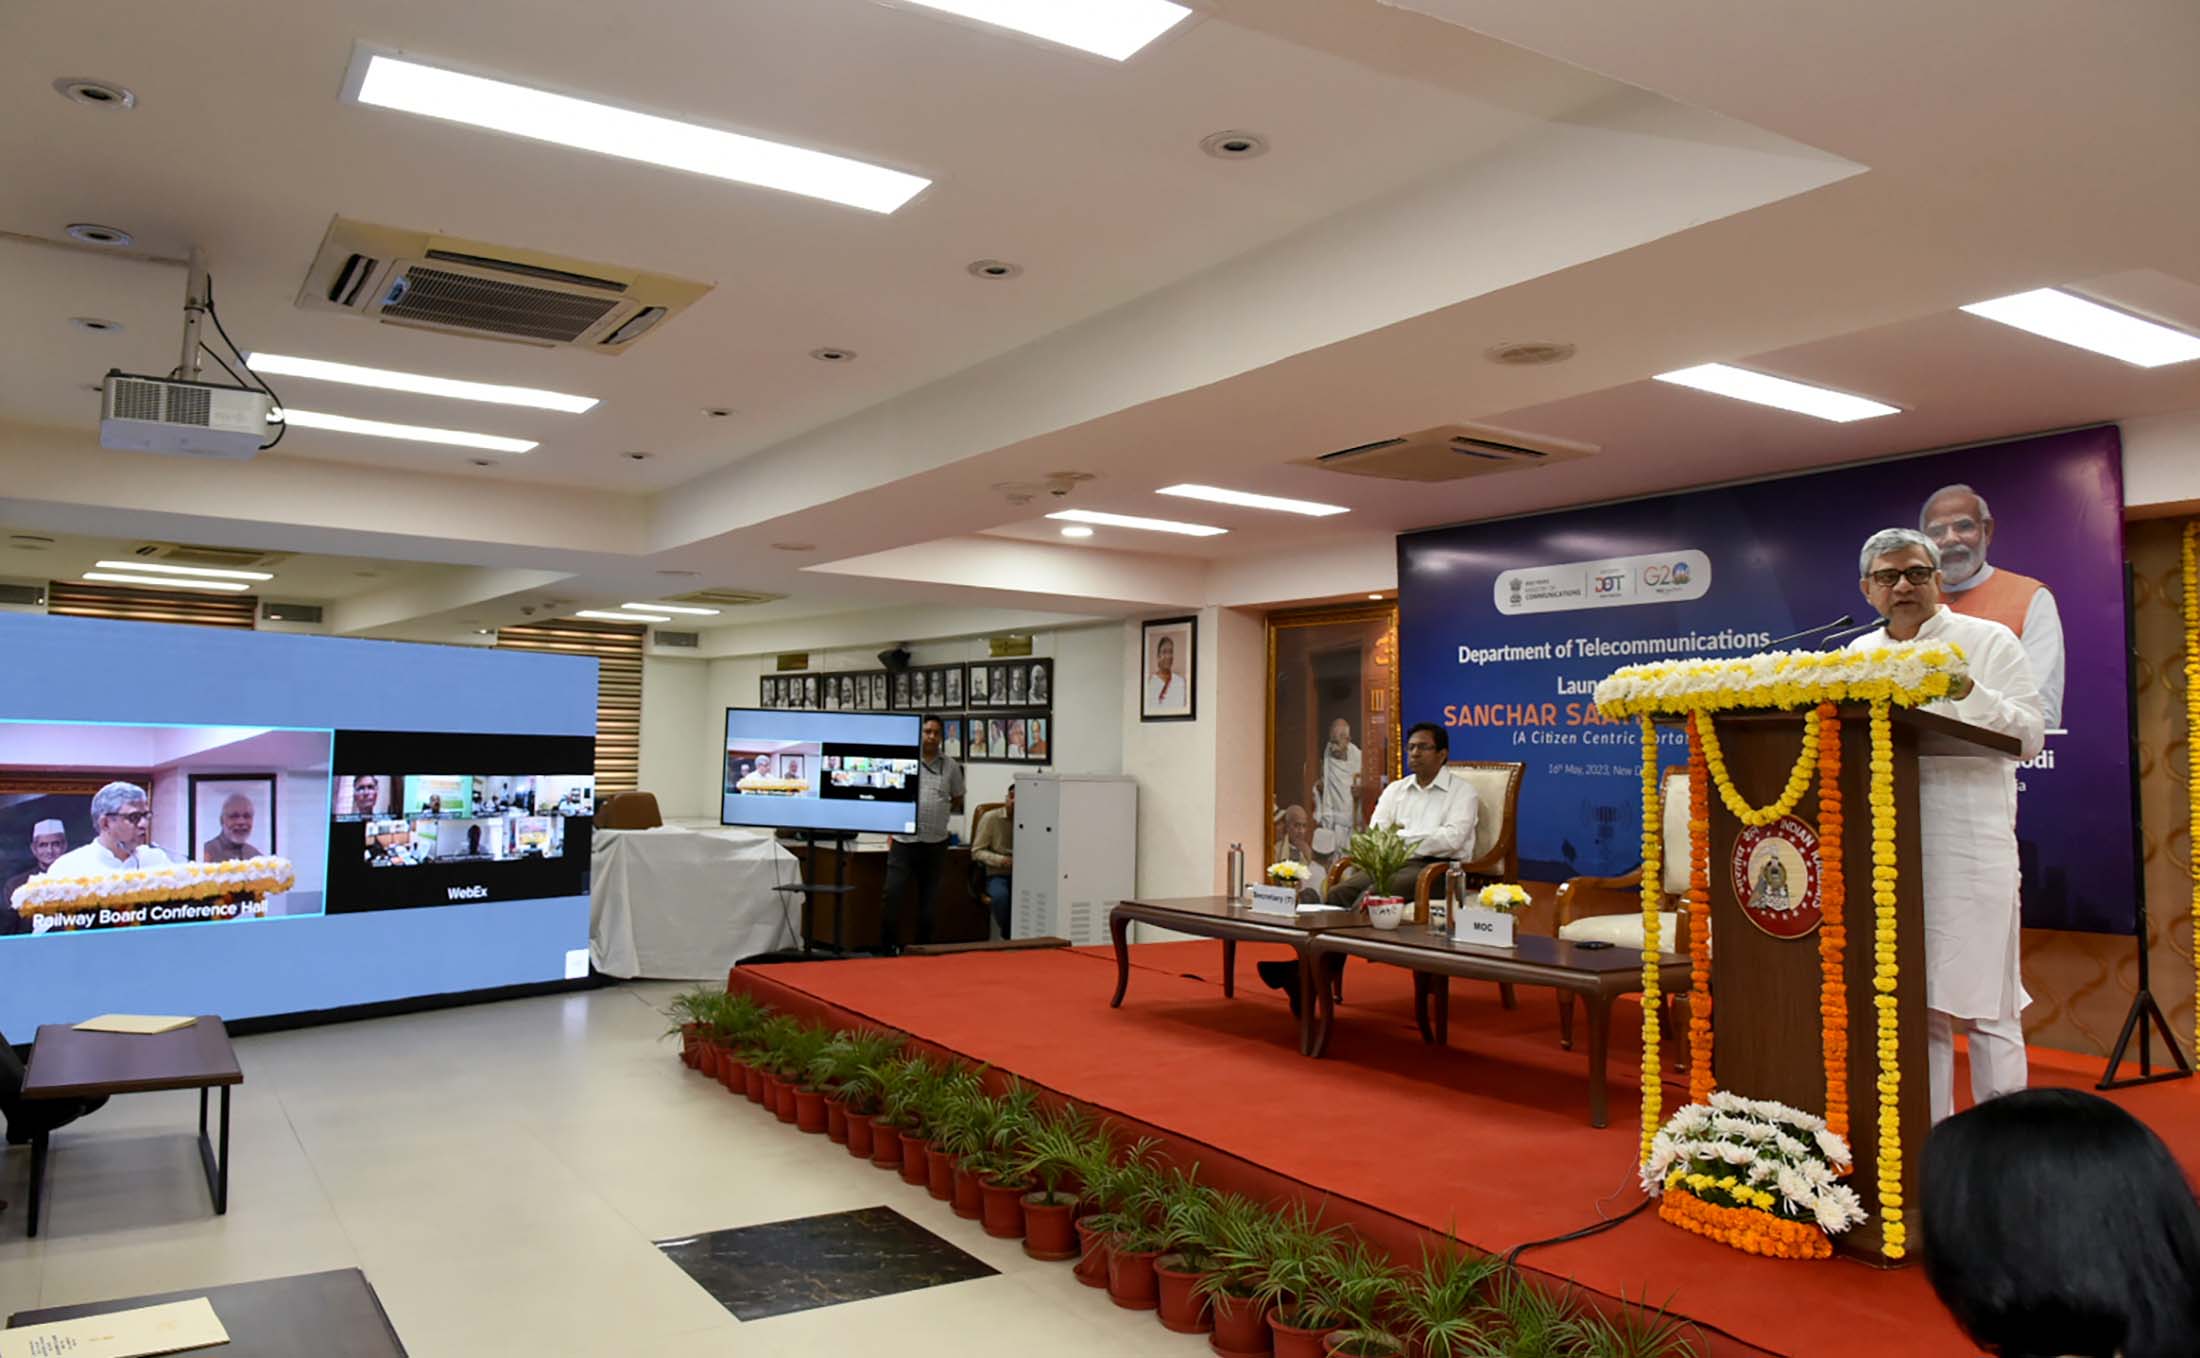 Sanchar Saathi Portal Launched: केंद्रीय मंत्री श्री अश्विनी वैष्णव ने आज संचार साथी पोर्टल लॉन्च किया